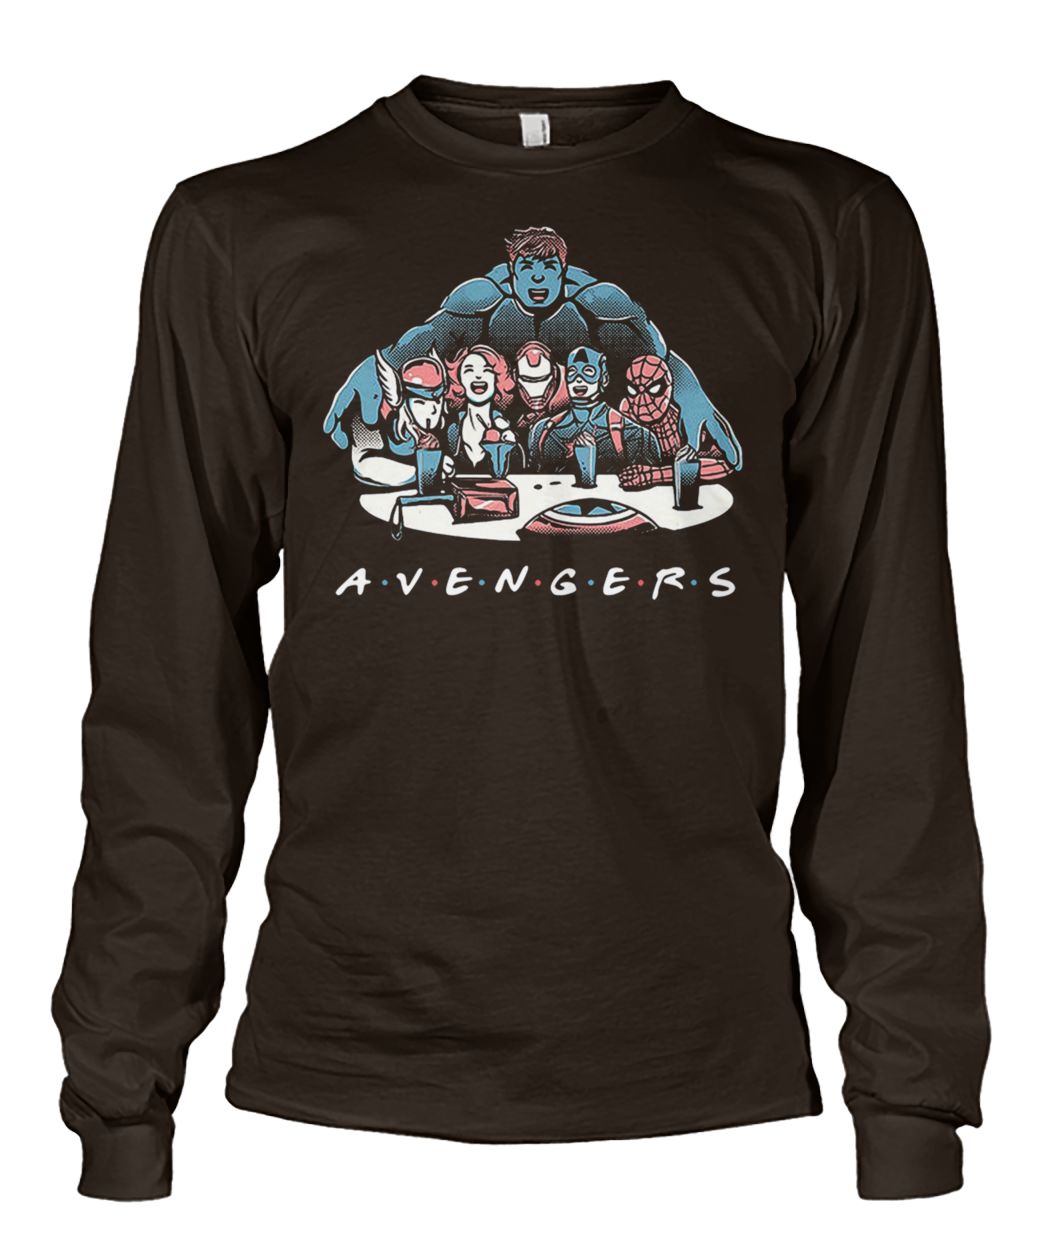 Avengers end game avengers friends unisex long sleeve